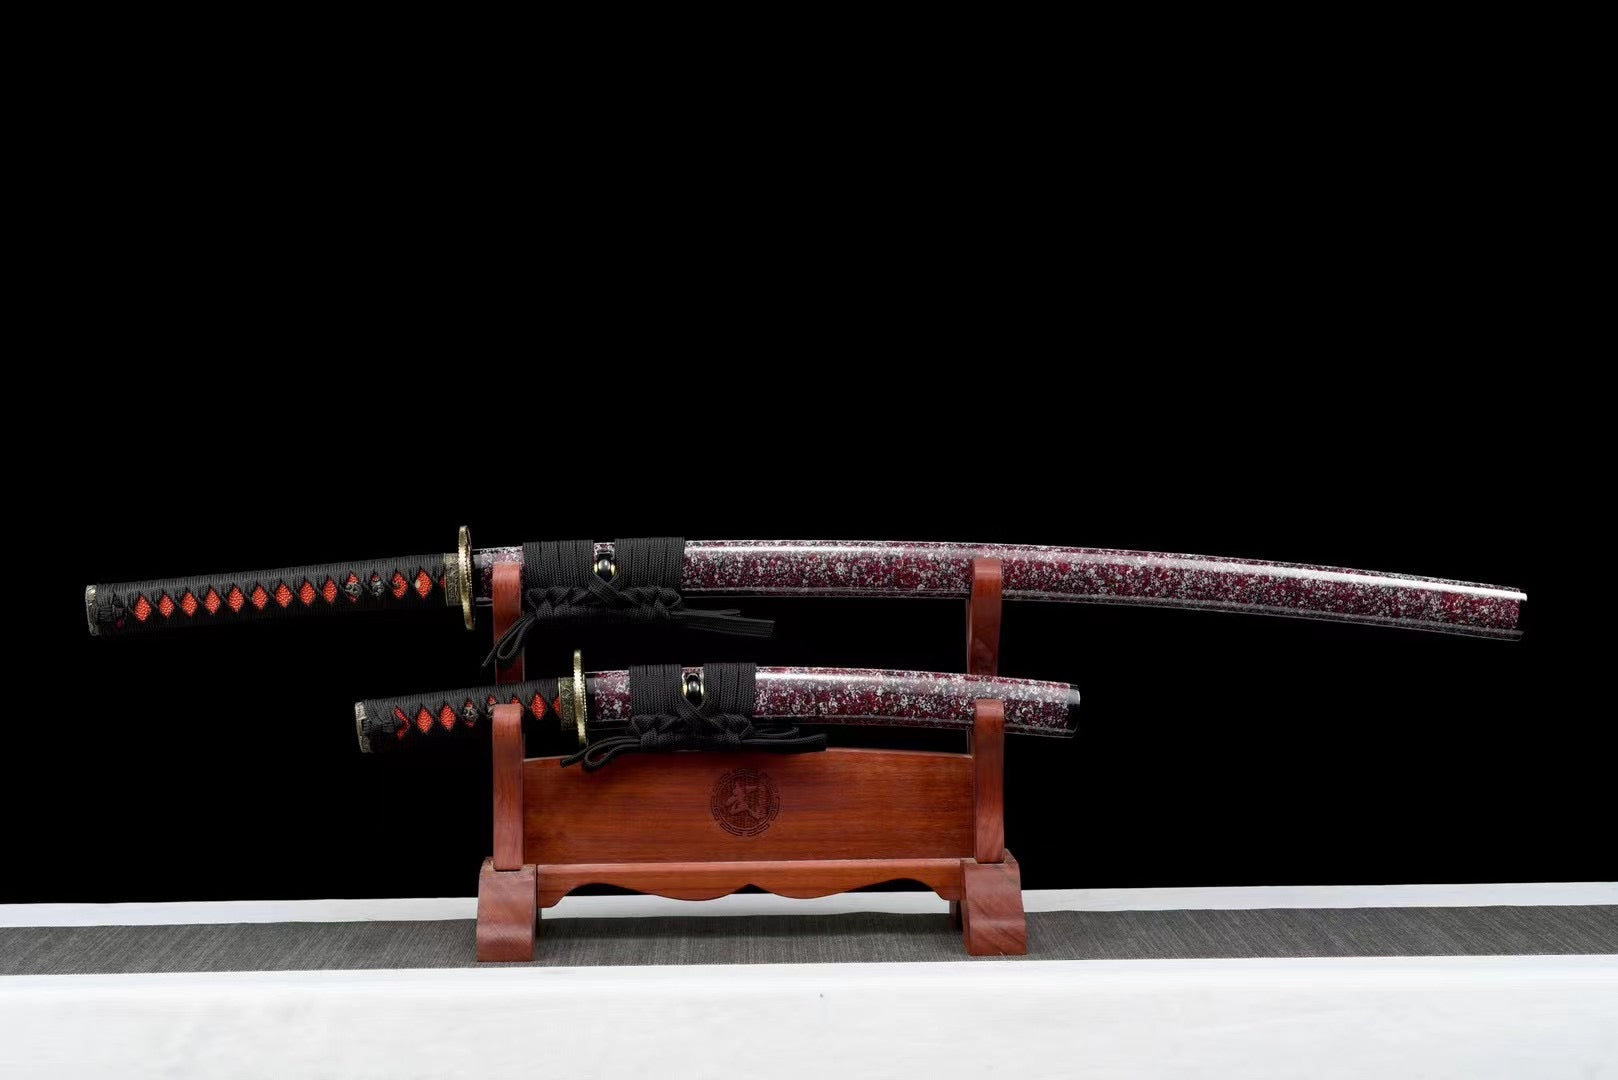 Floating Dragon Katana Set, Katana and Tanto Sword,Japanese Samurai Sword,Real Katana,Handmade sword, High manganese steel